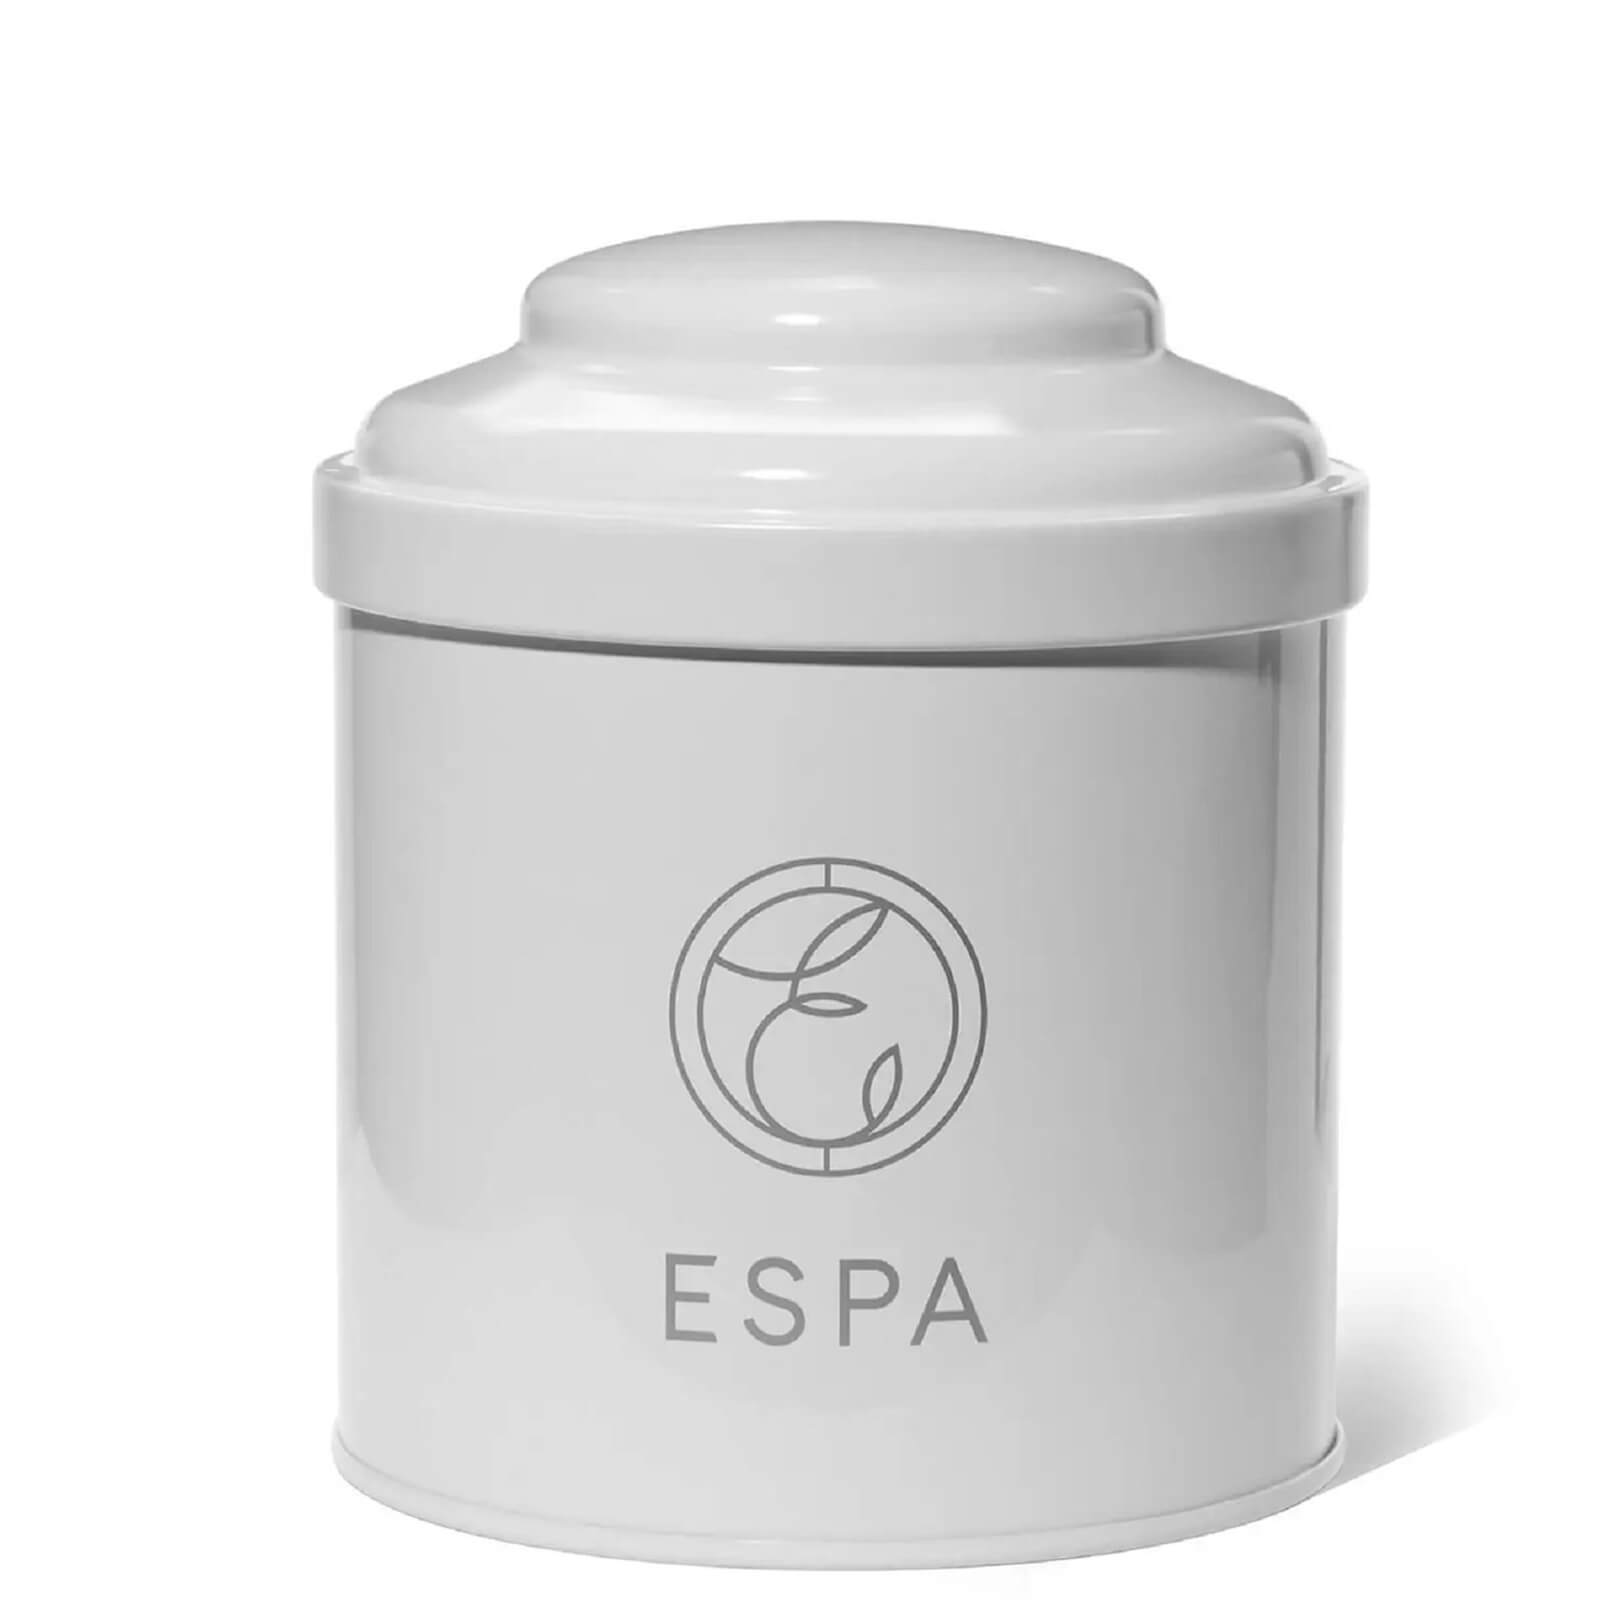 ESPA EPSA Connection Wellbeing Tea Caddy